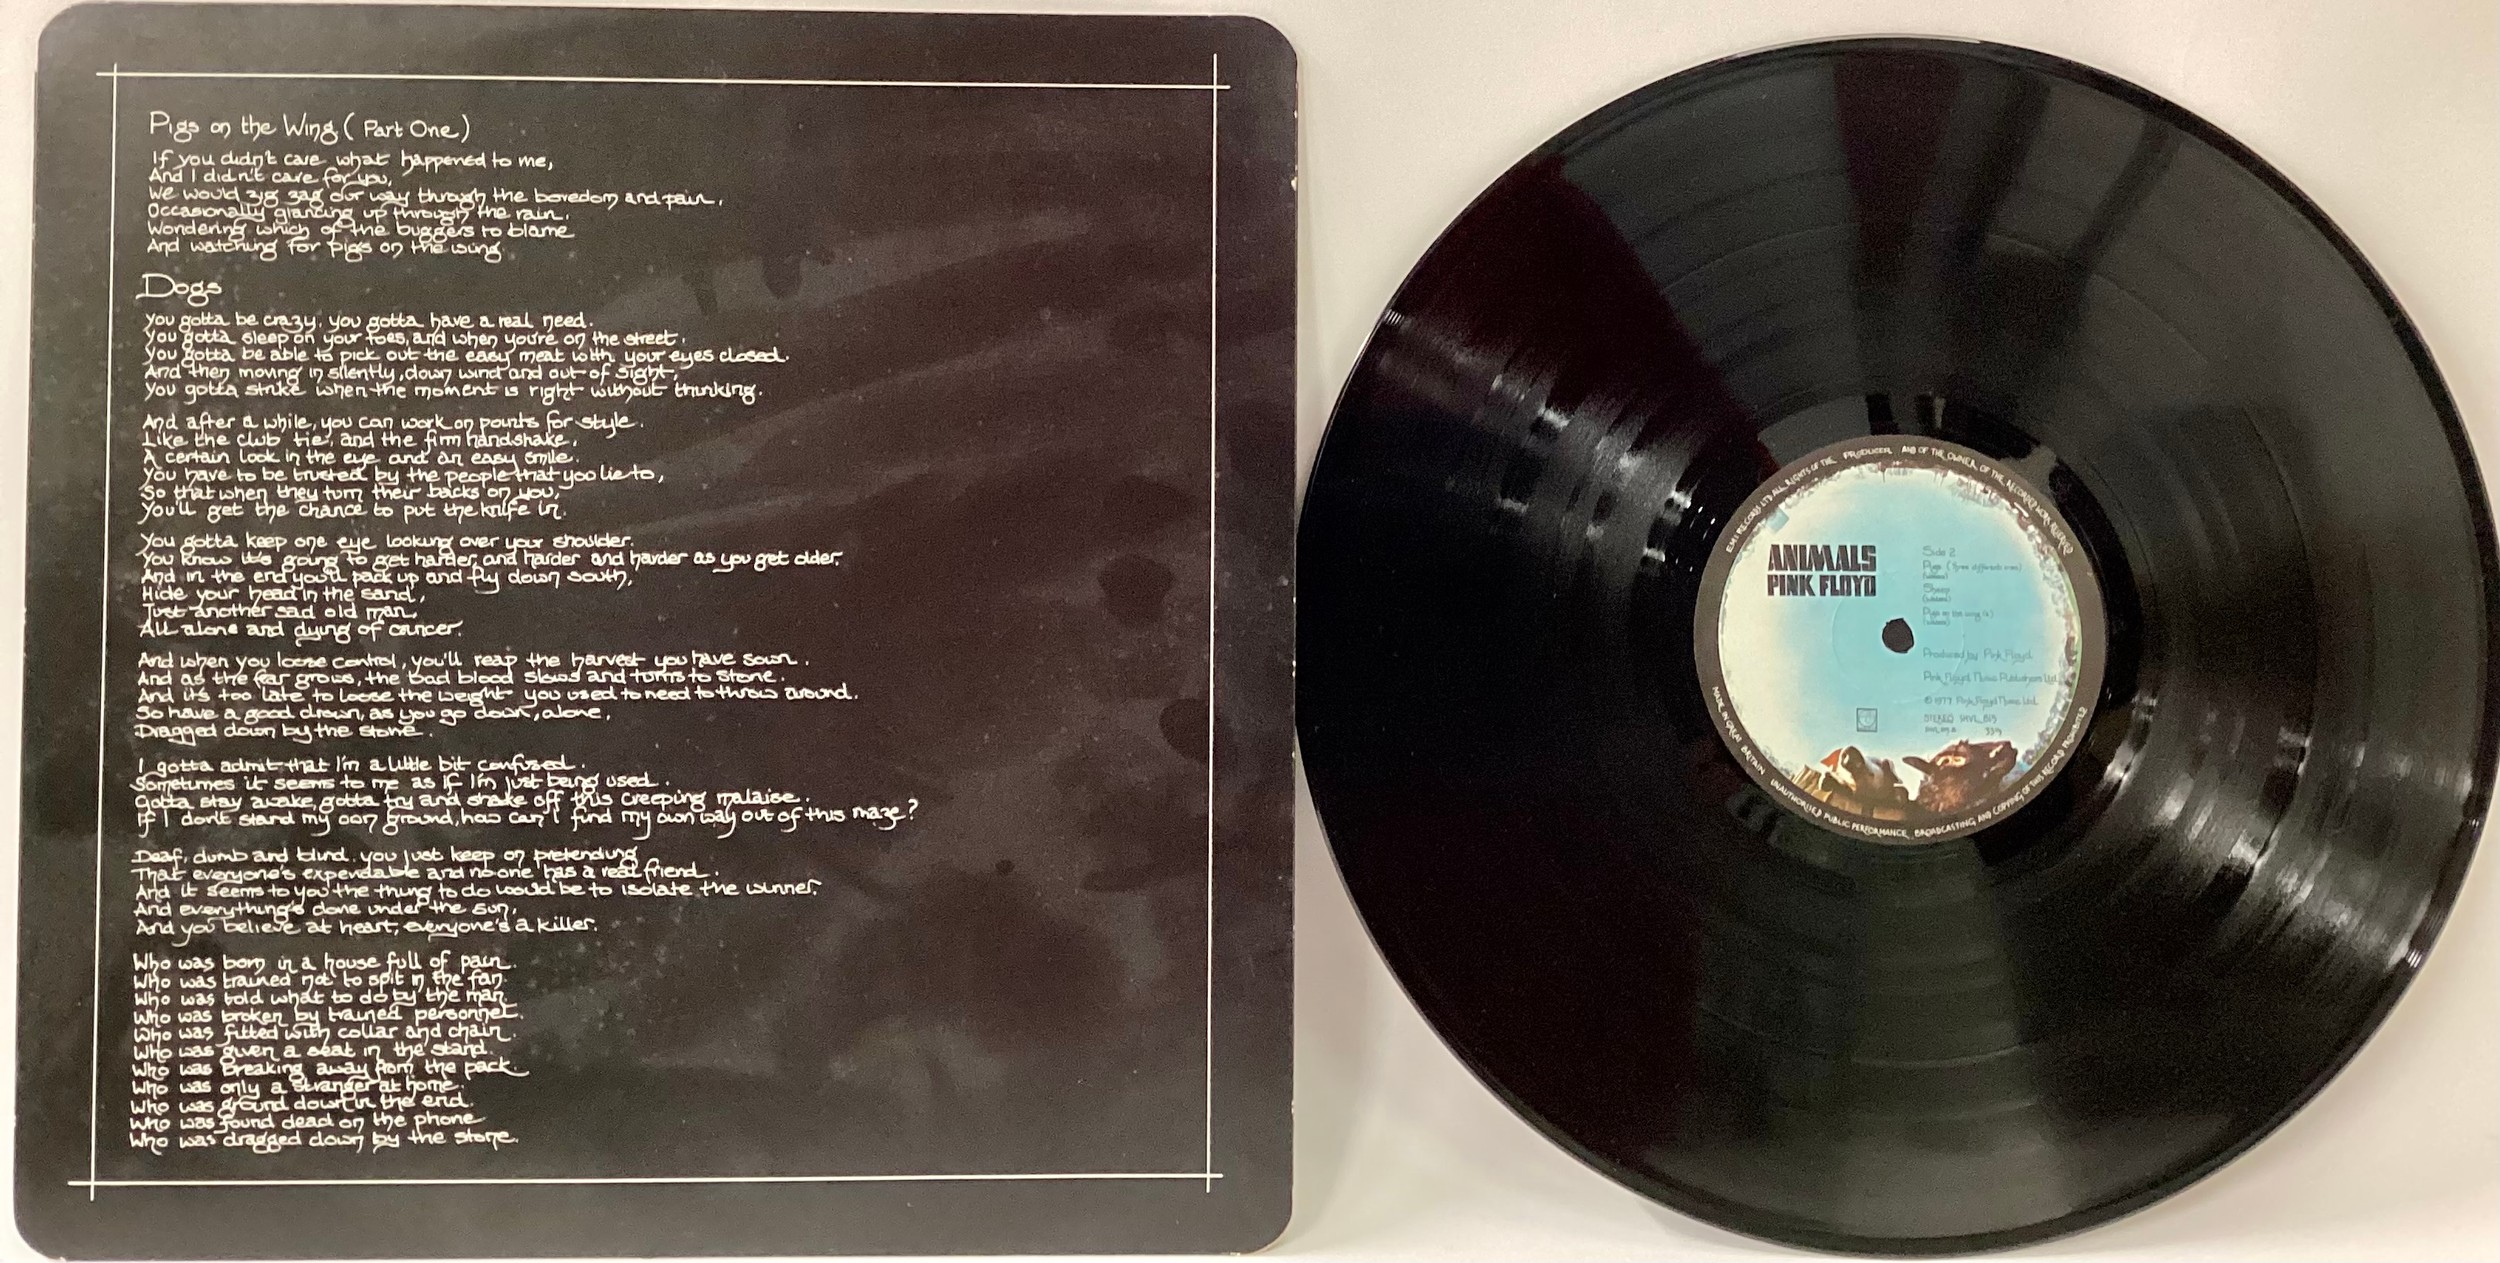 PINK FLOYD VINYL ALBUM ‘ANIMALS’. Great copy of this Gatefold Floyd album found here on Harvest - Image 4 of 4